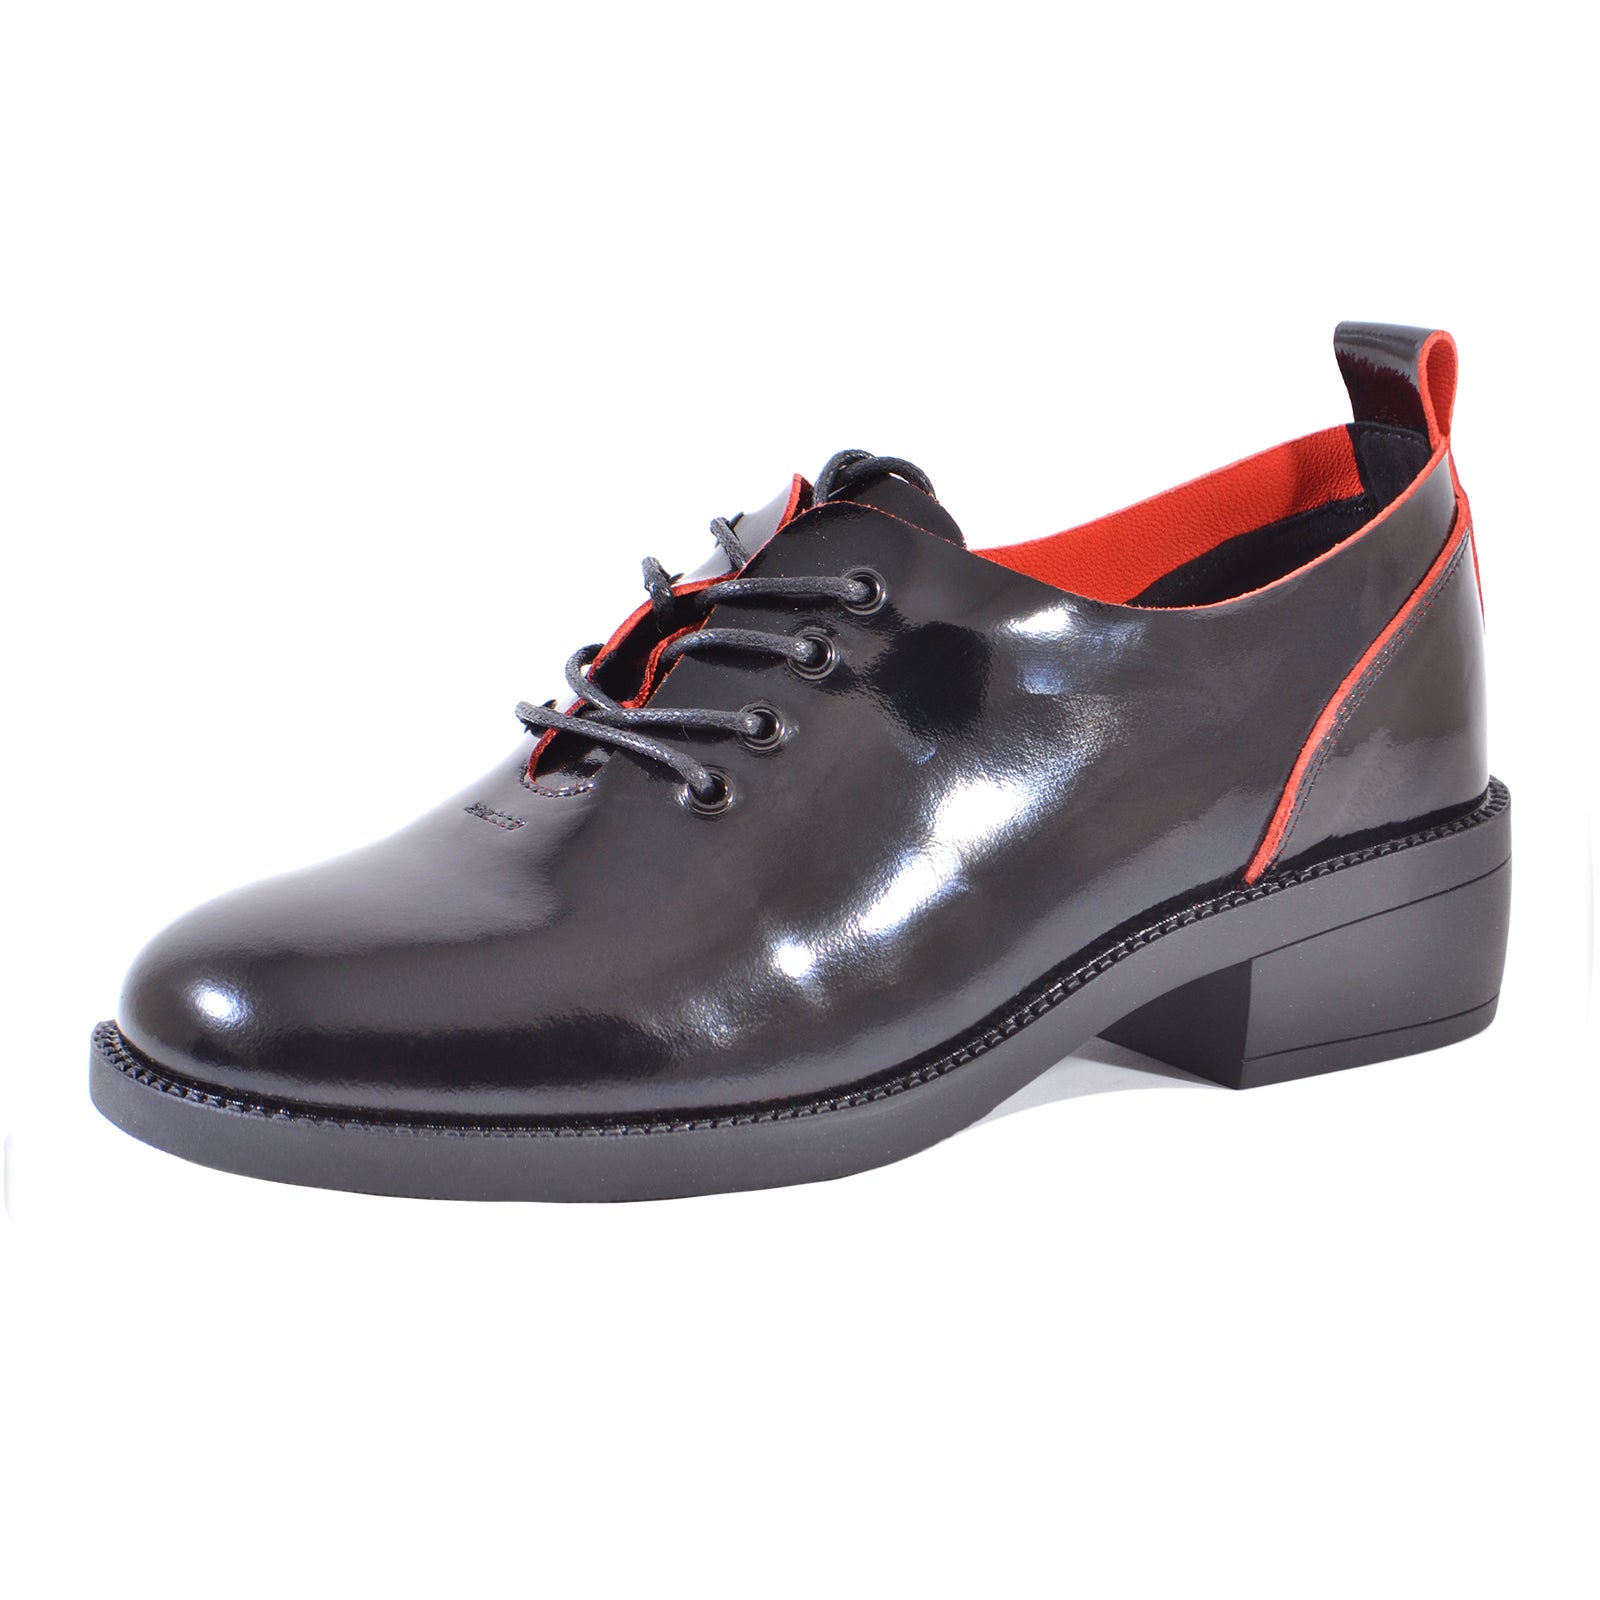 Pantofi Formazione 191018-1 Black/Red